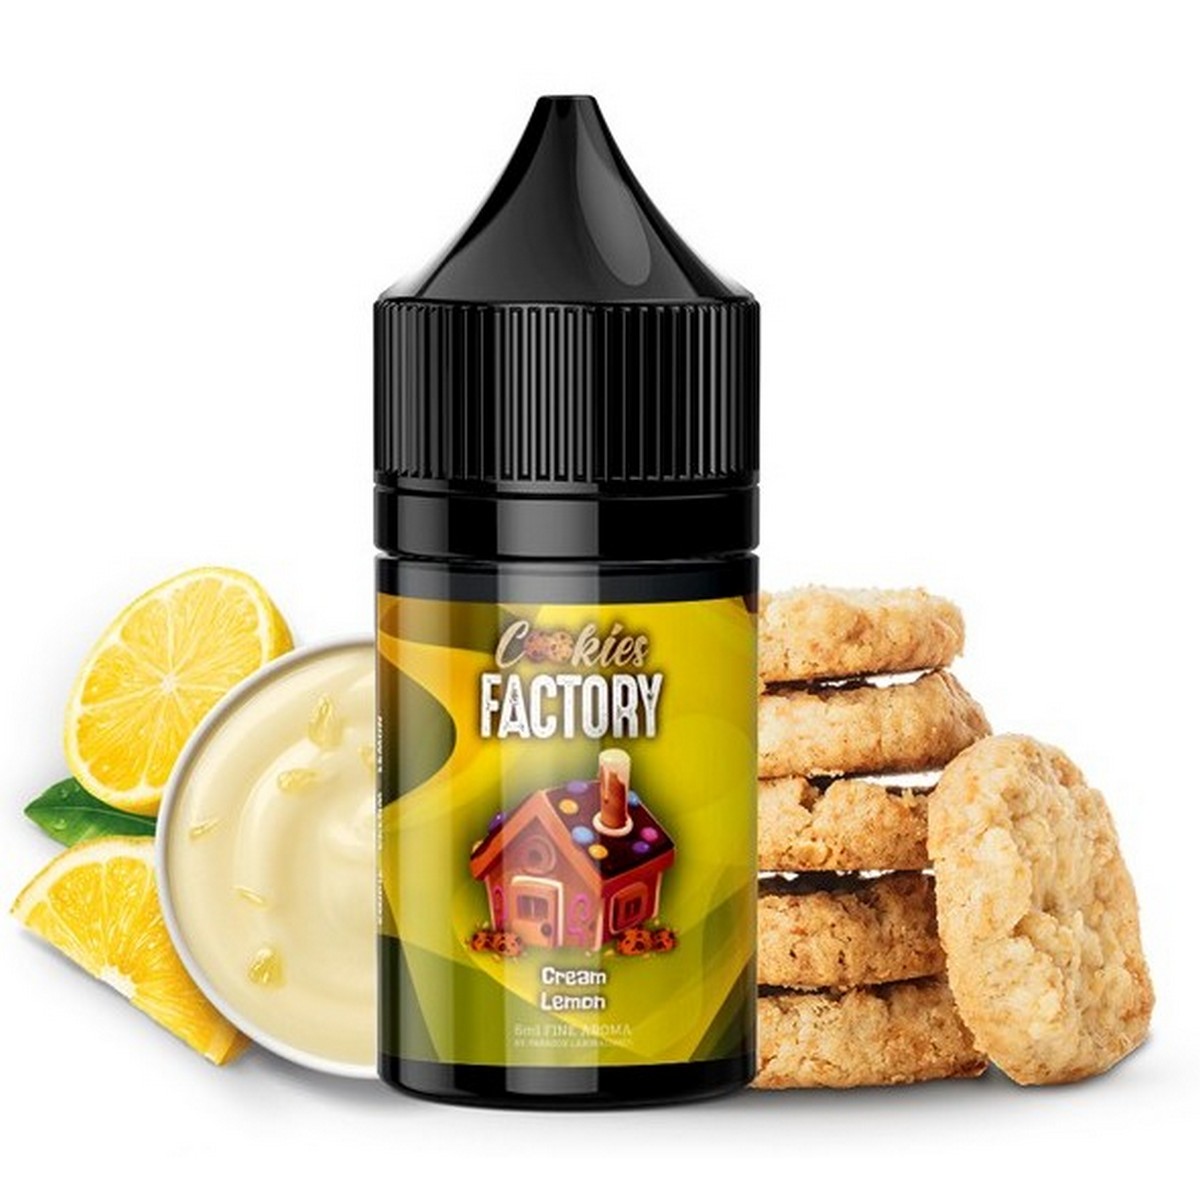 Cookies Factory Flavour Shot Cream Lemon 6ml/30ml